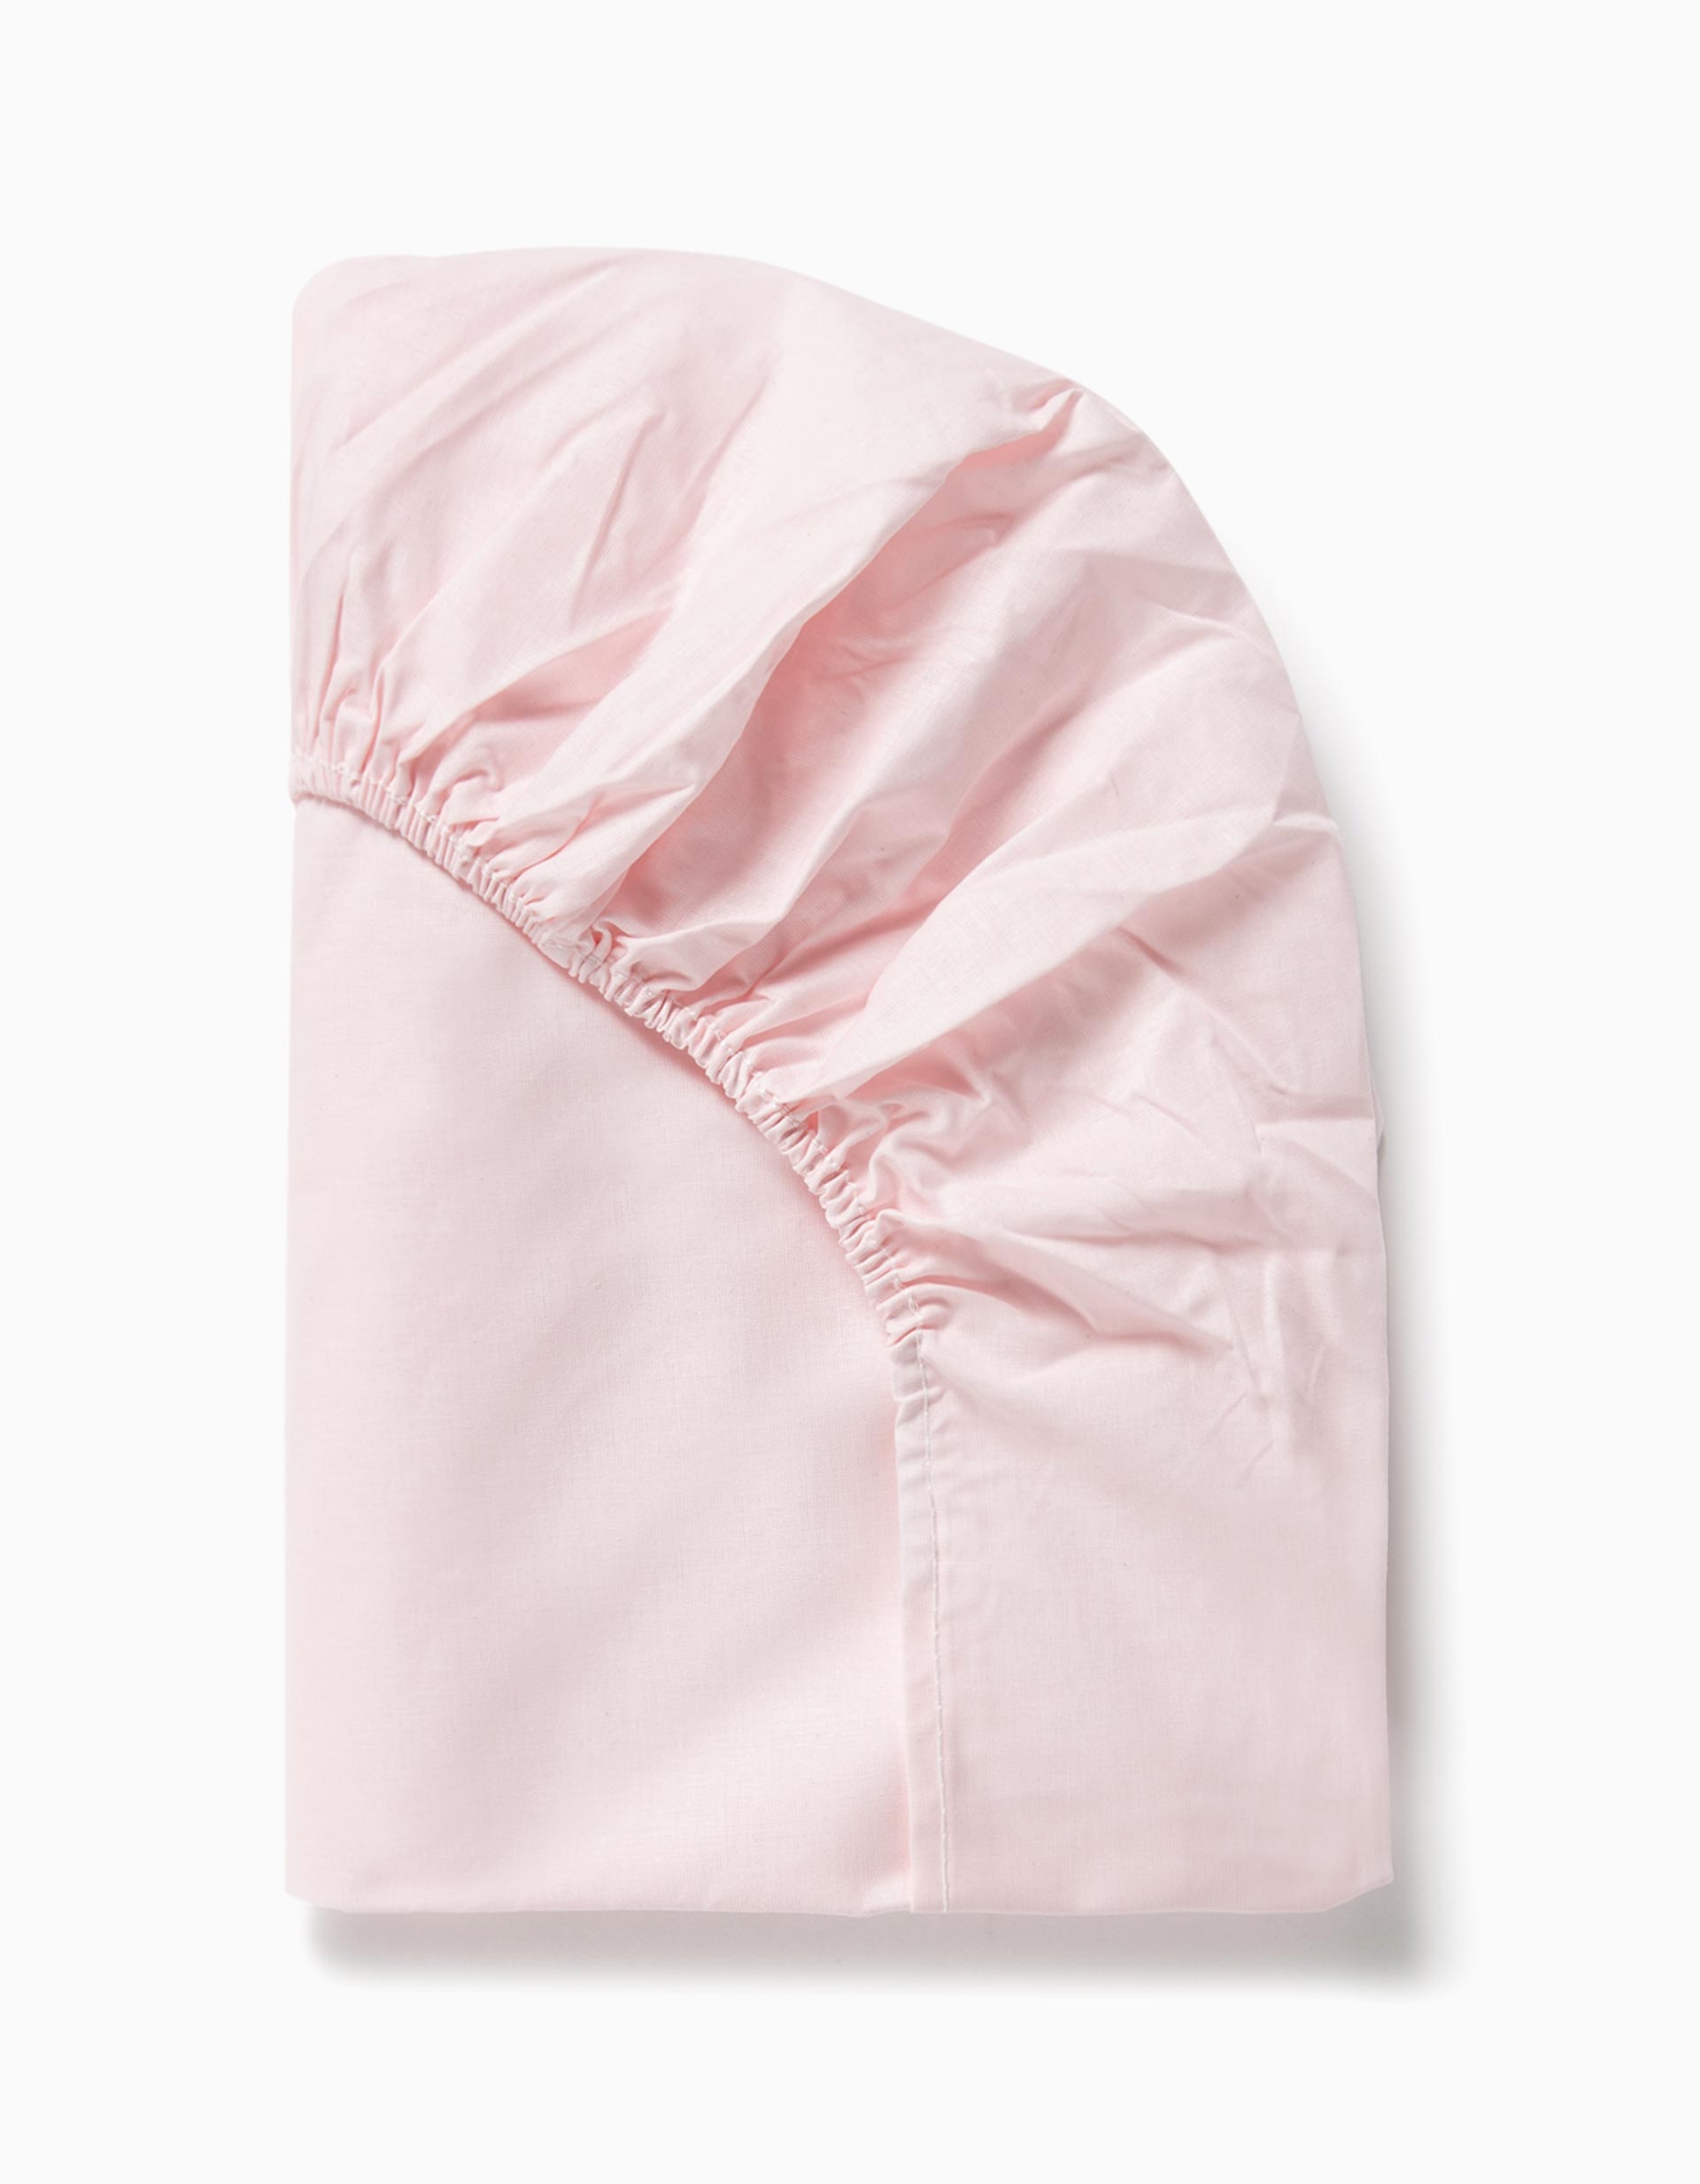 Adjustable Sheet 80x55cm Interbaby, Pink